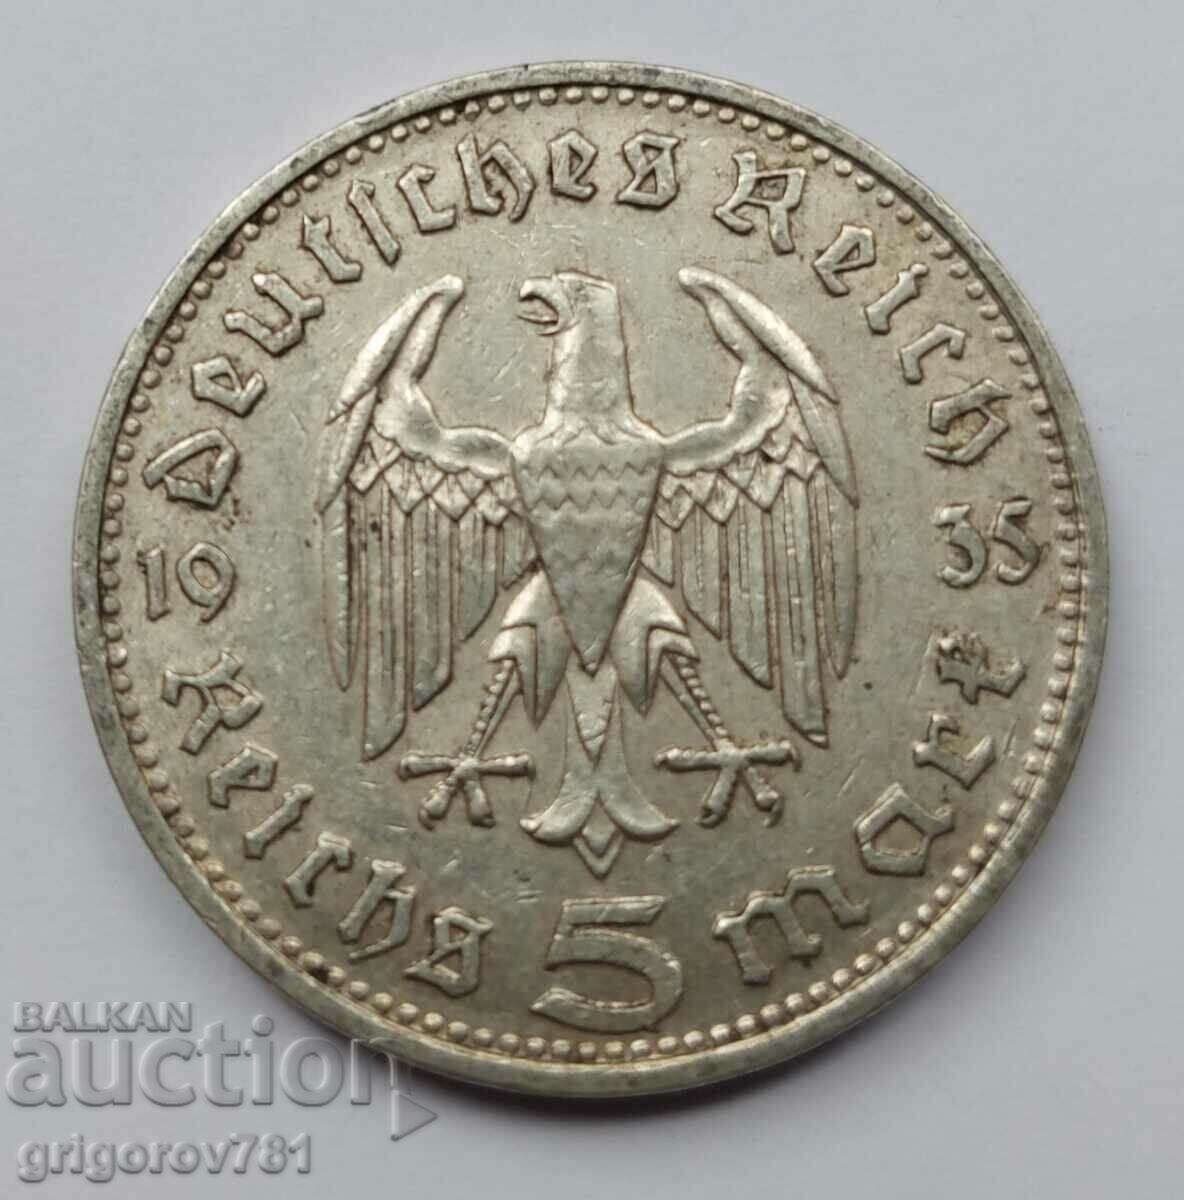 5 Mark Silver Γερμανία 1935 D III Reich Ασημένιο νόμισμα #64